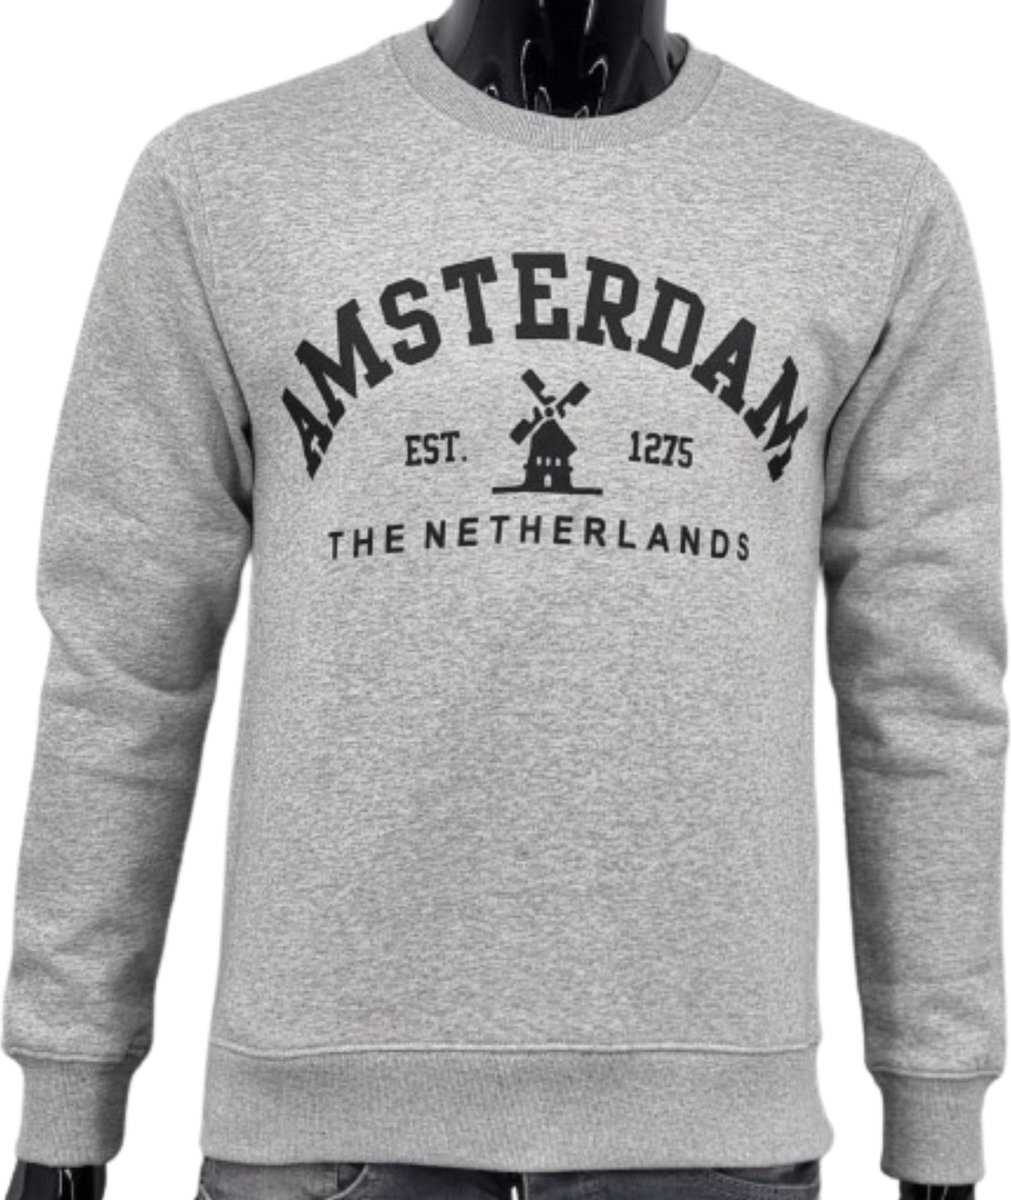 Hitman - Heren Trui - Heren Sweater - Holland Souvenir - Amsterdam Souvenir - Amsterdam Sweater - Grijs - Maat M